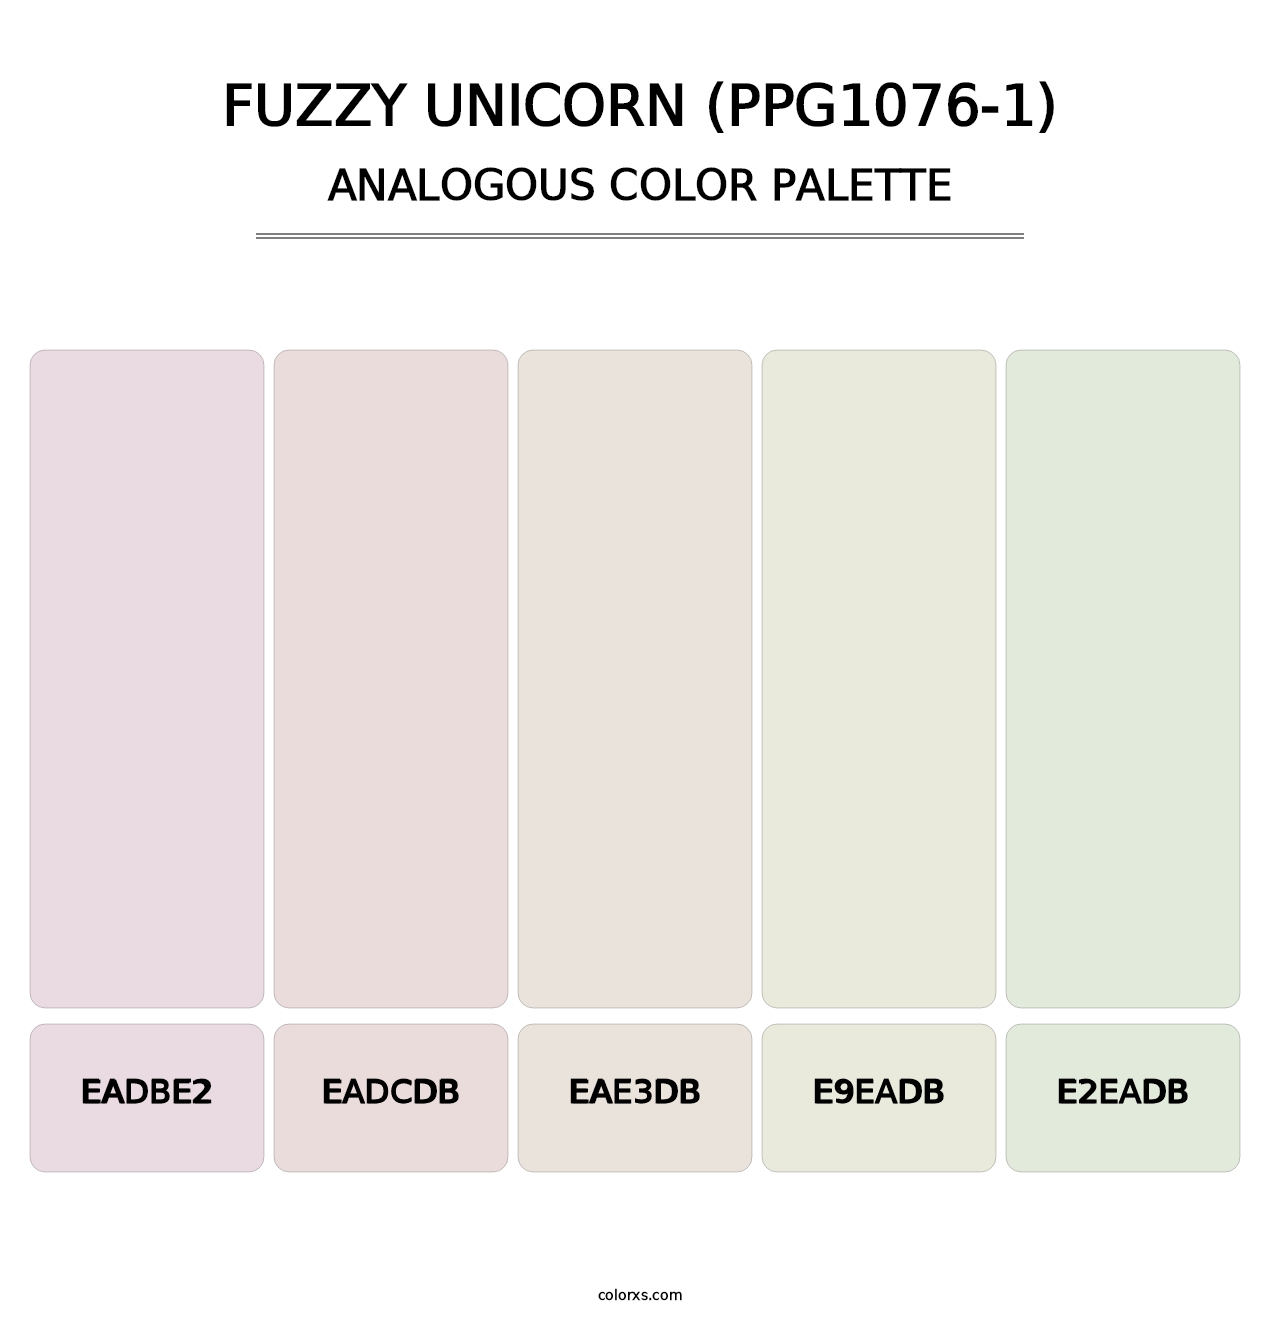 Fuzzy Unicorn (PPG1076-1) - Analogous Color Palette